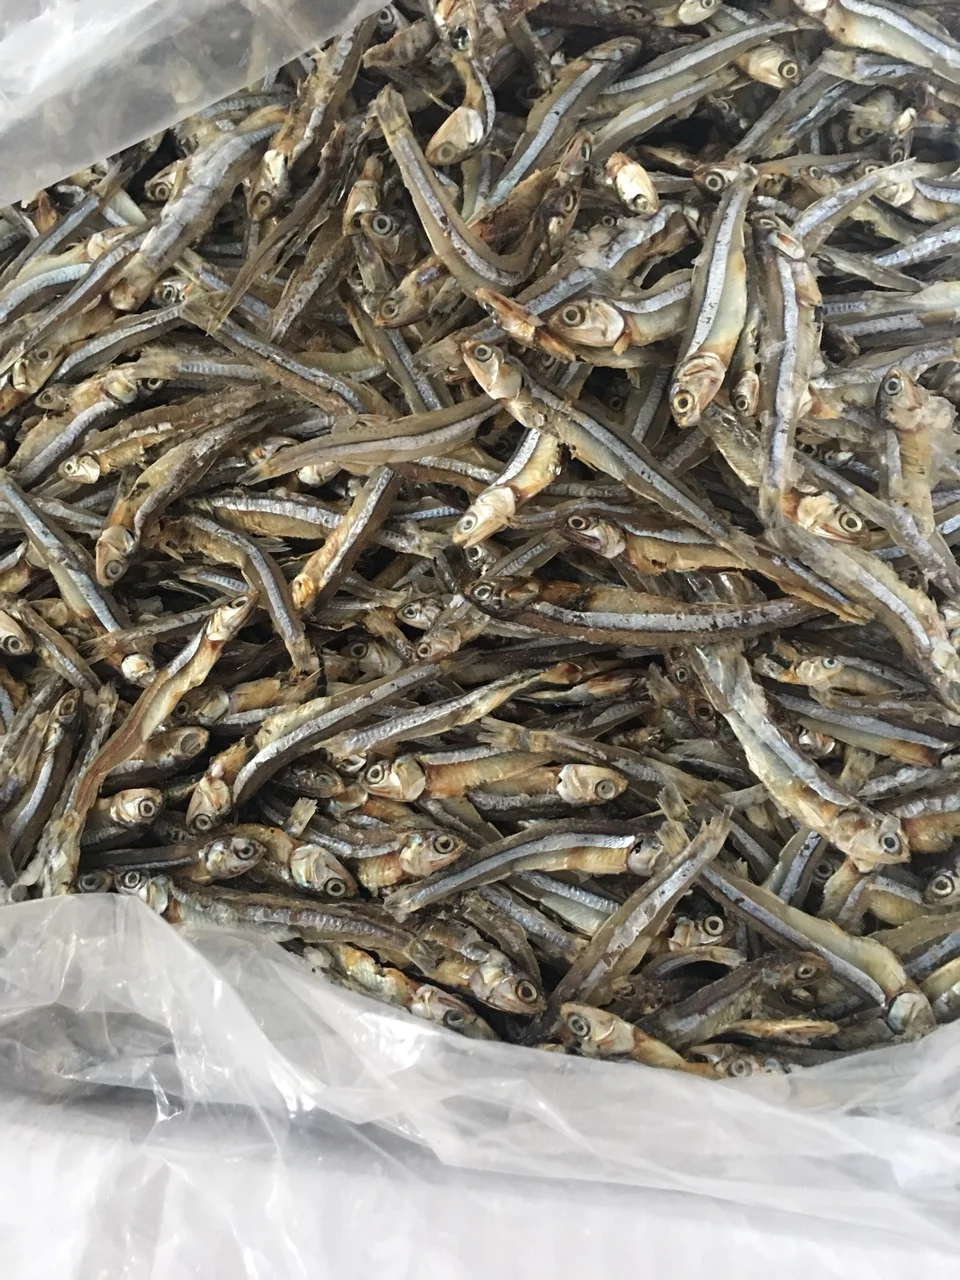 Вьетнамская сушеная Анчоуса, Натуральные Сушеные на Солнце рыбы